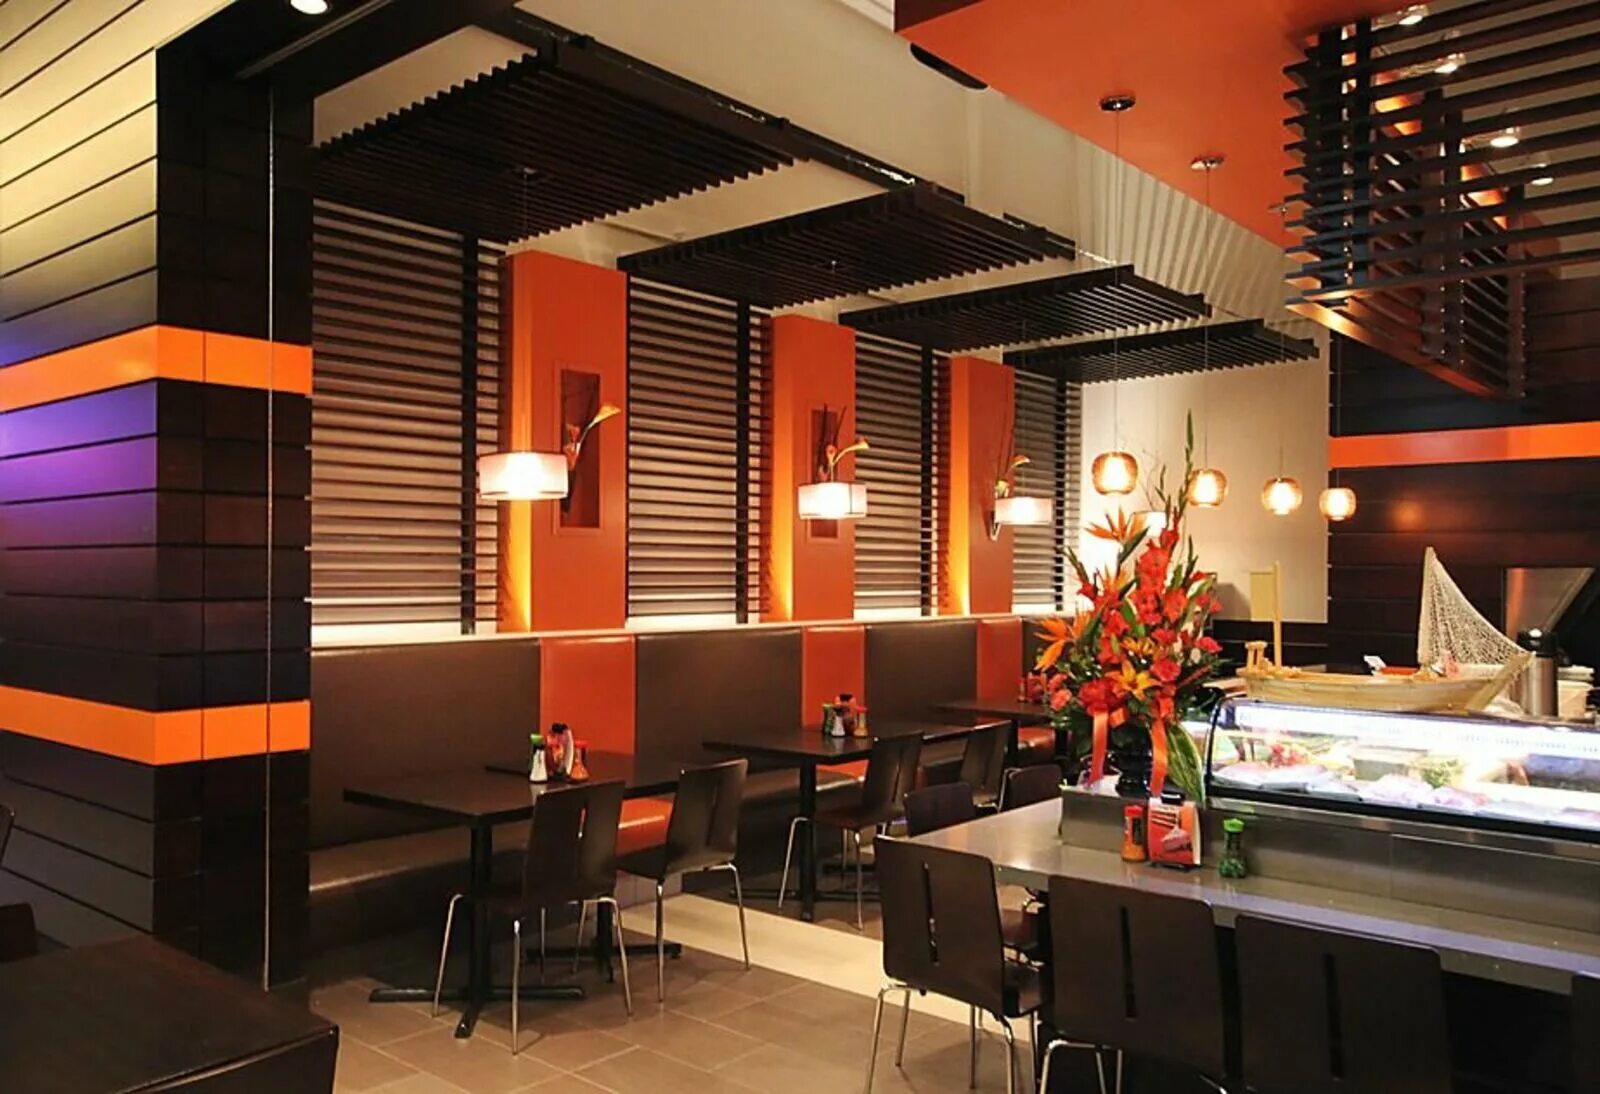 Где кафе суши. Суши ресторан. Ресторан в оранжевых тонах. Суши бар интерьер. Интерьер кафе.